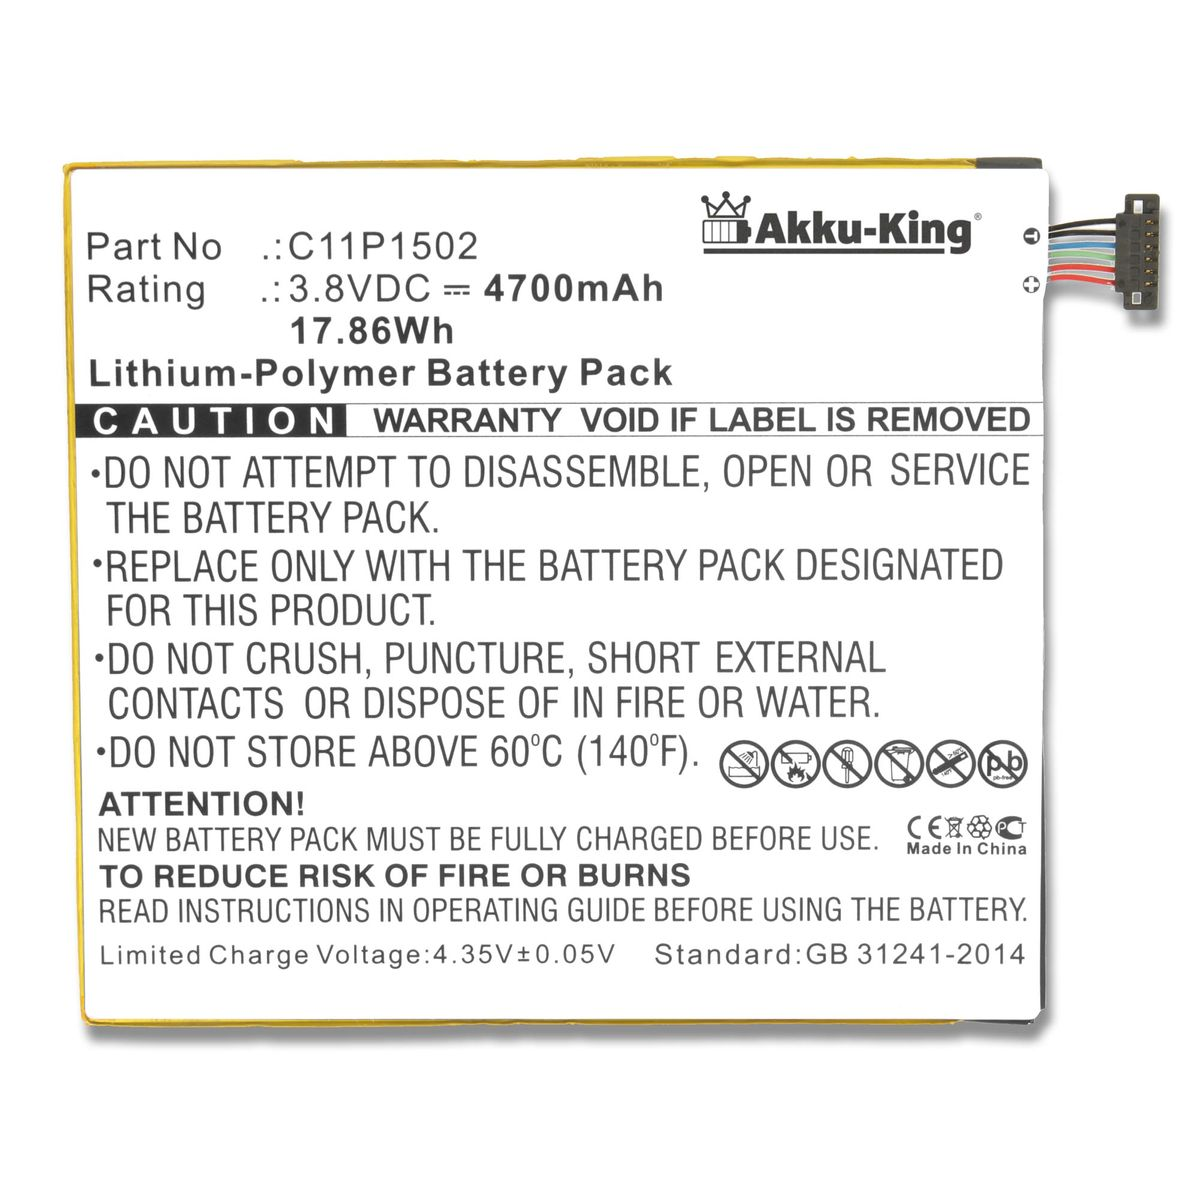 Li-Polymer AKKU-KING Akku mit Geräte-Akku, Asus 3.8 4700mAh Volt, C11P1517 kompatibel